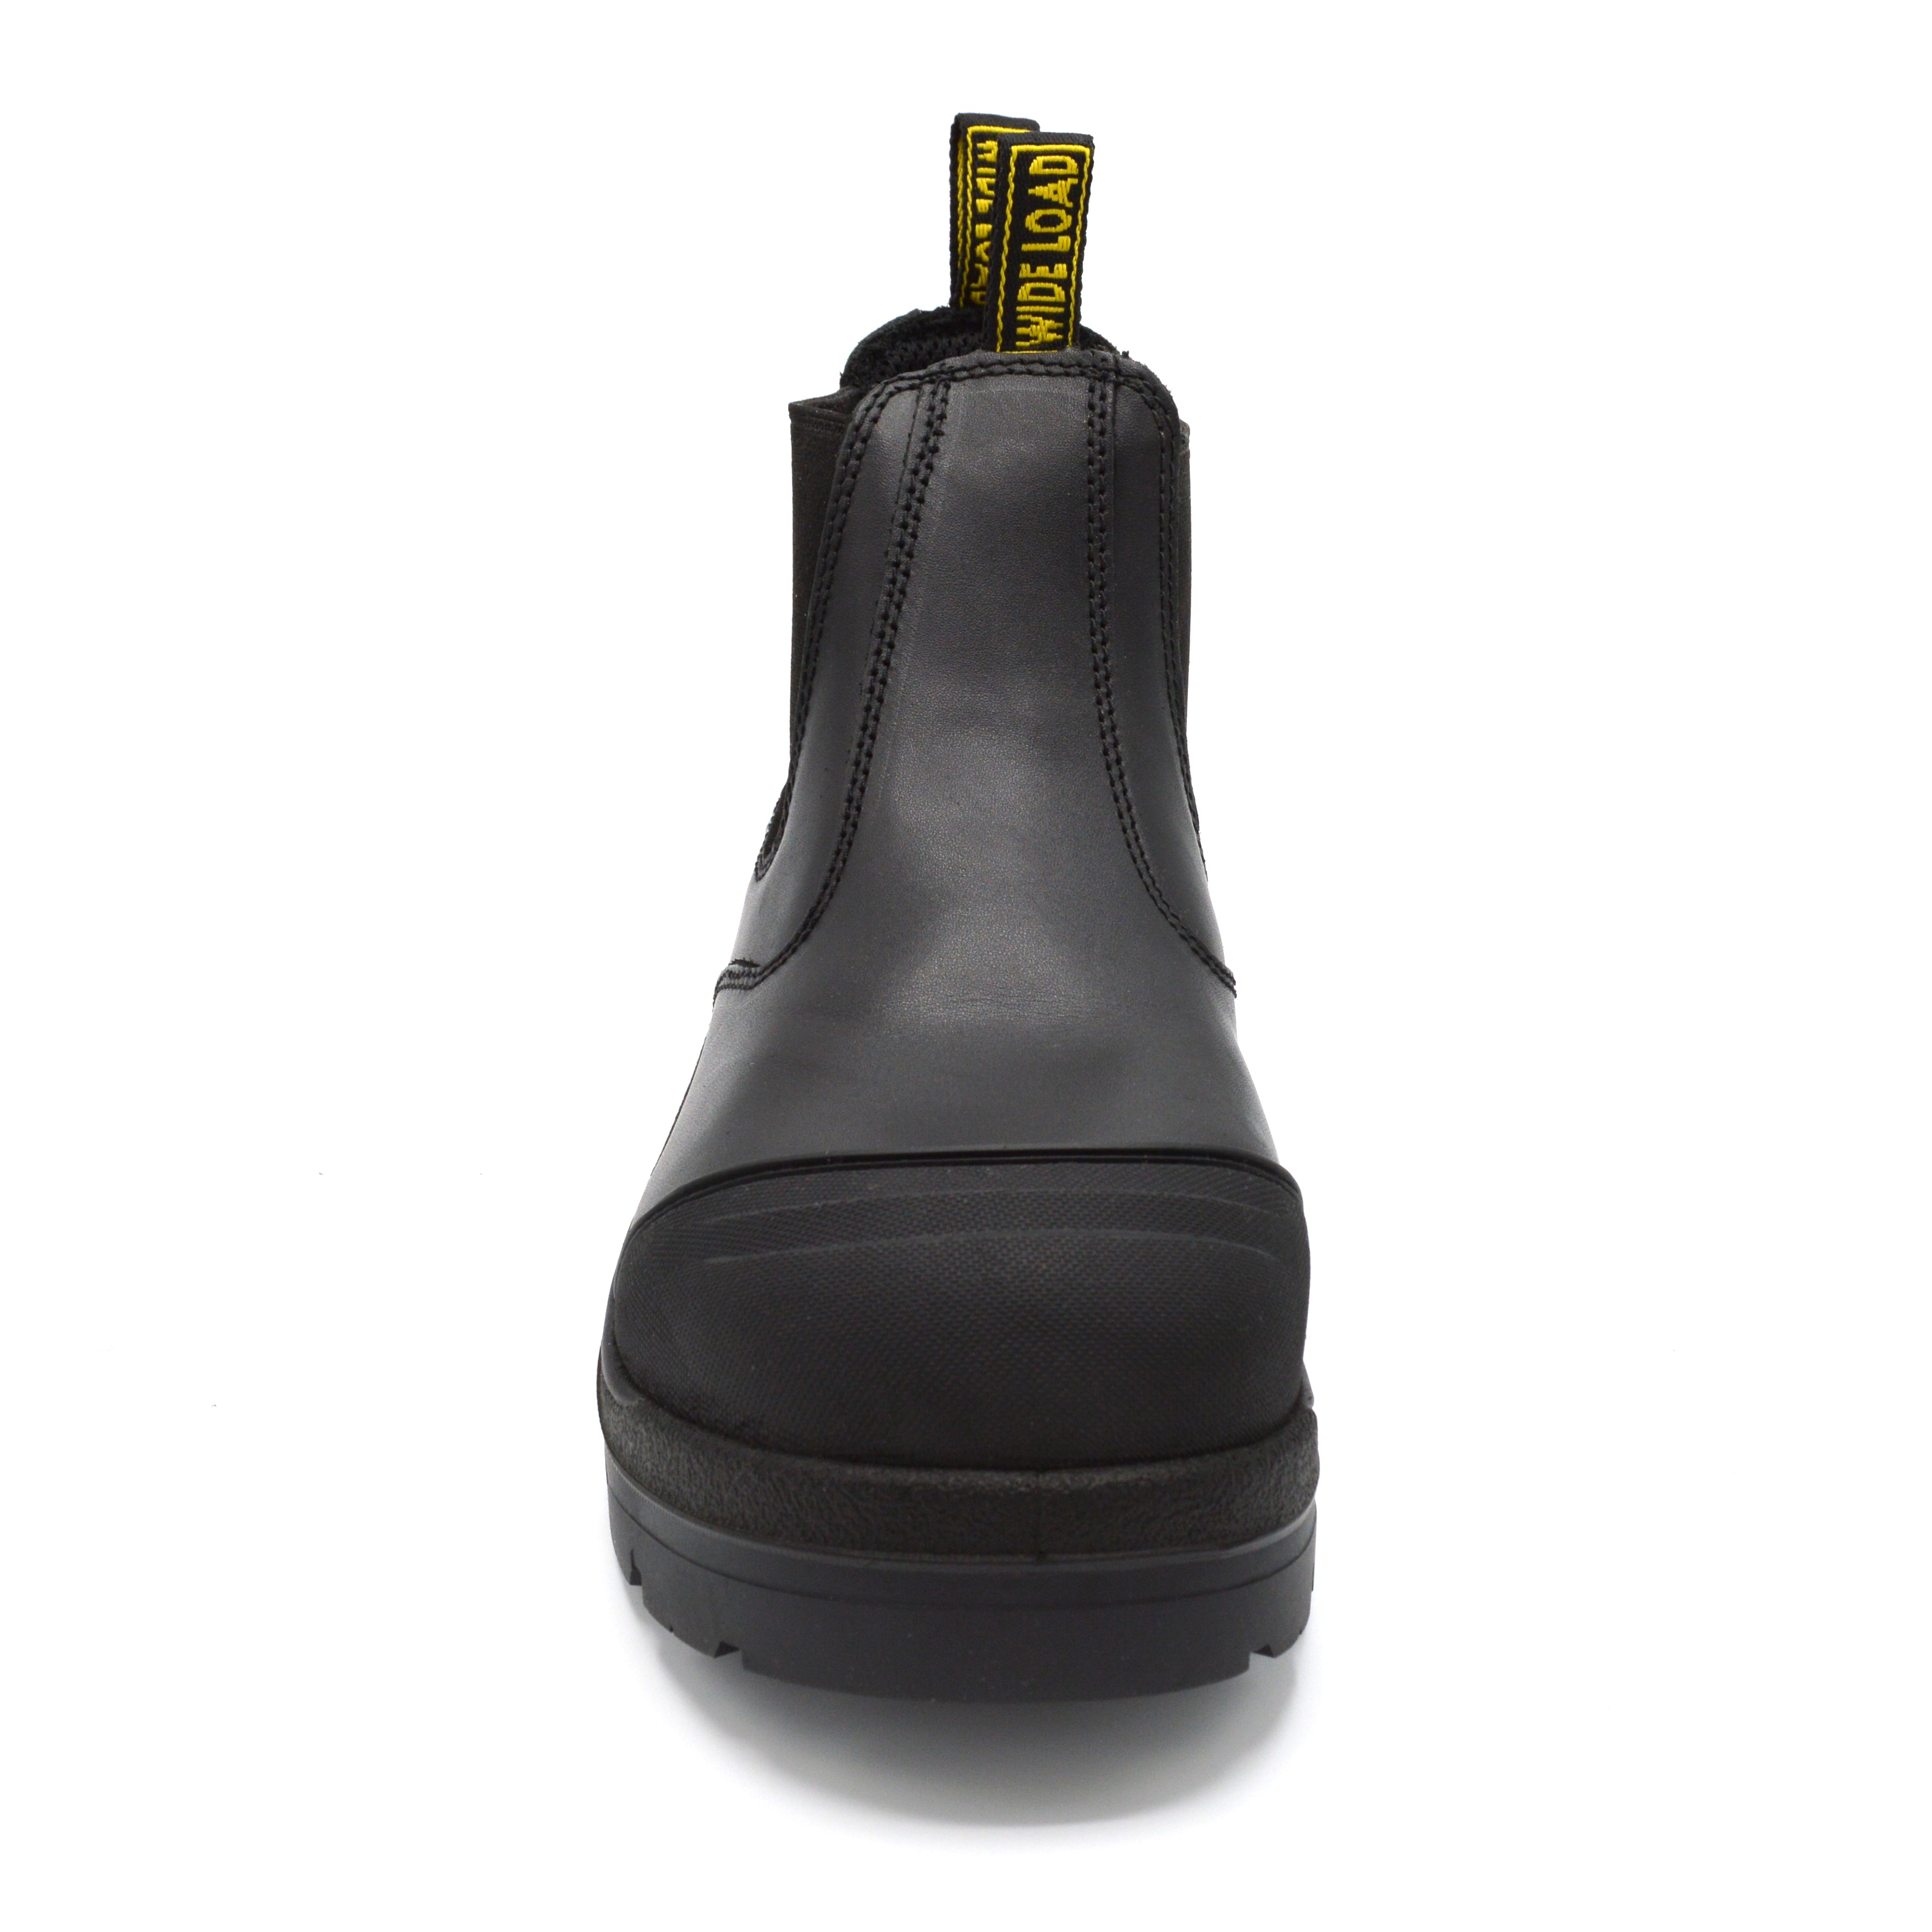 Men's Black Chelsea Safety Boot for Orthotics